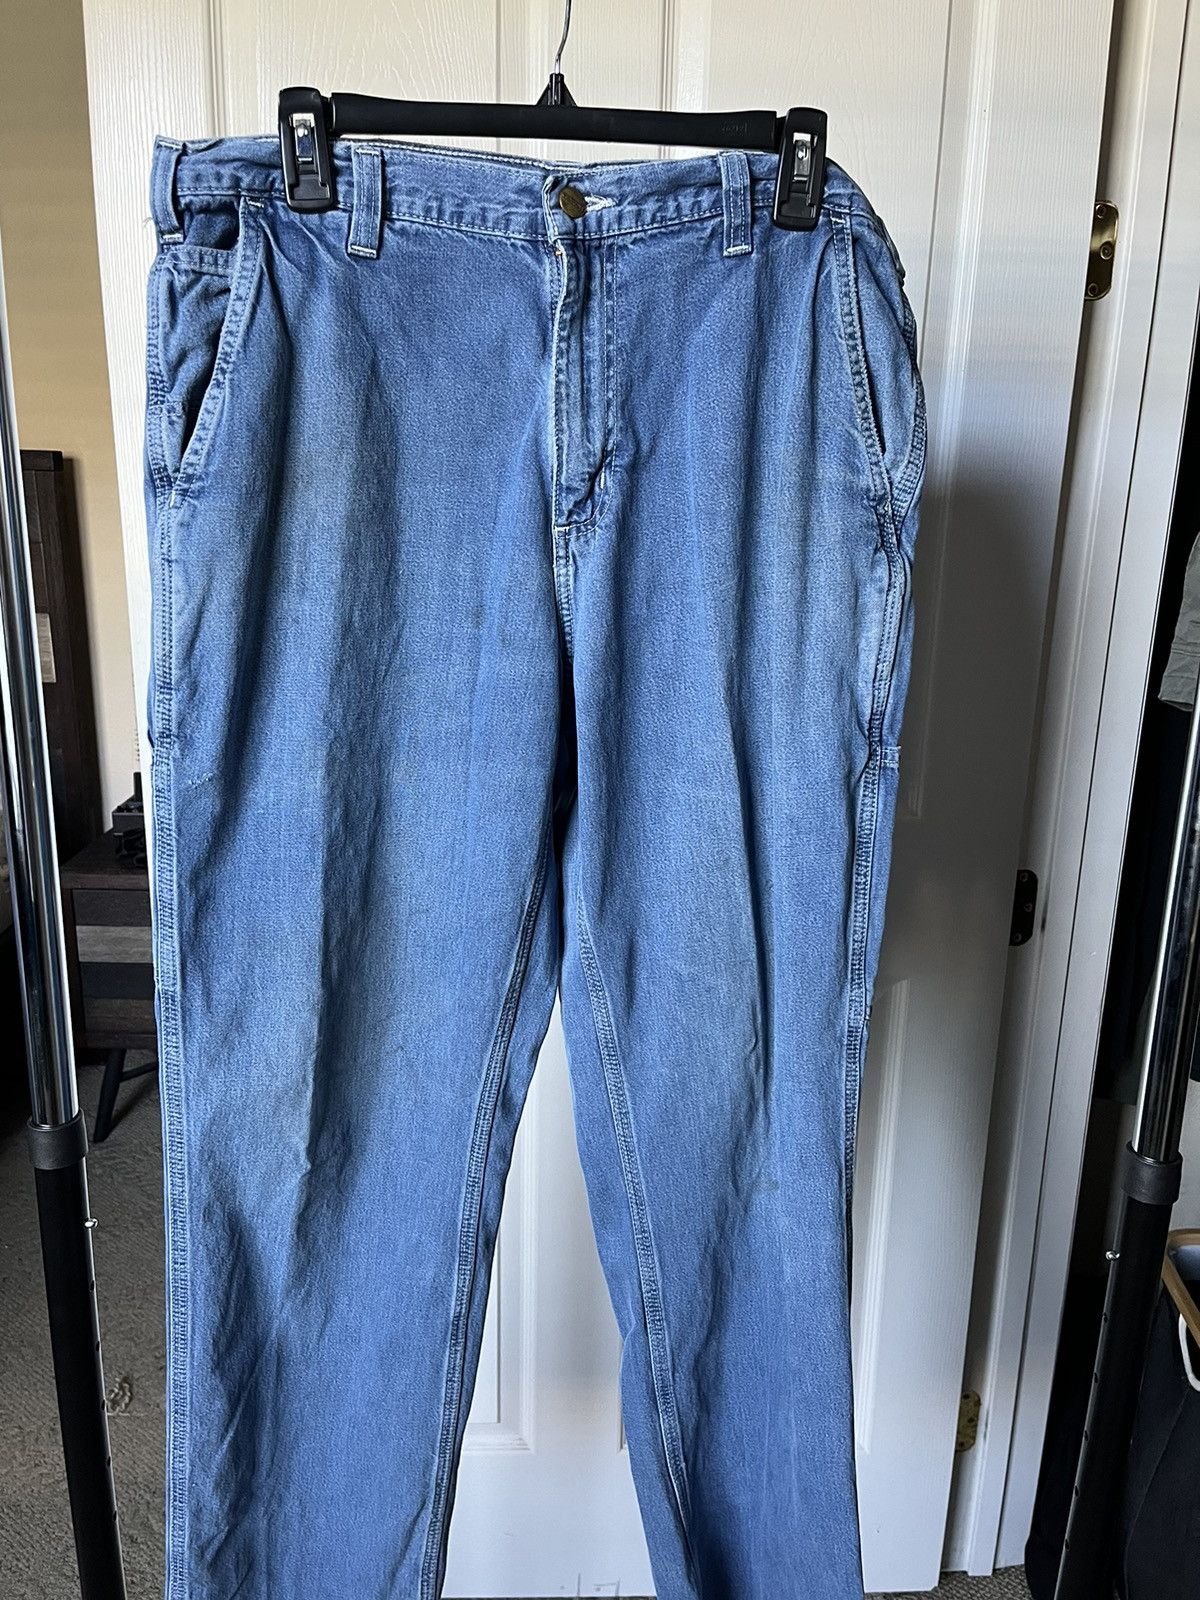 Vintage Carhartt Jeans | Grailed